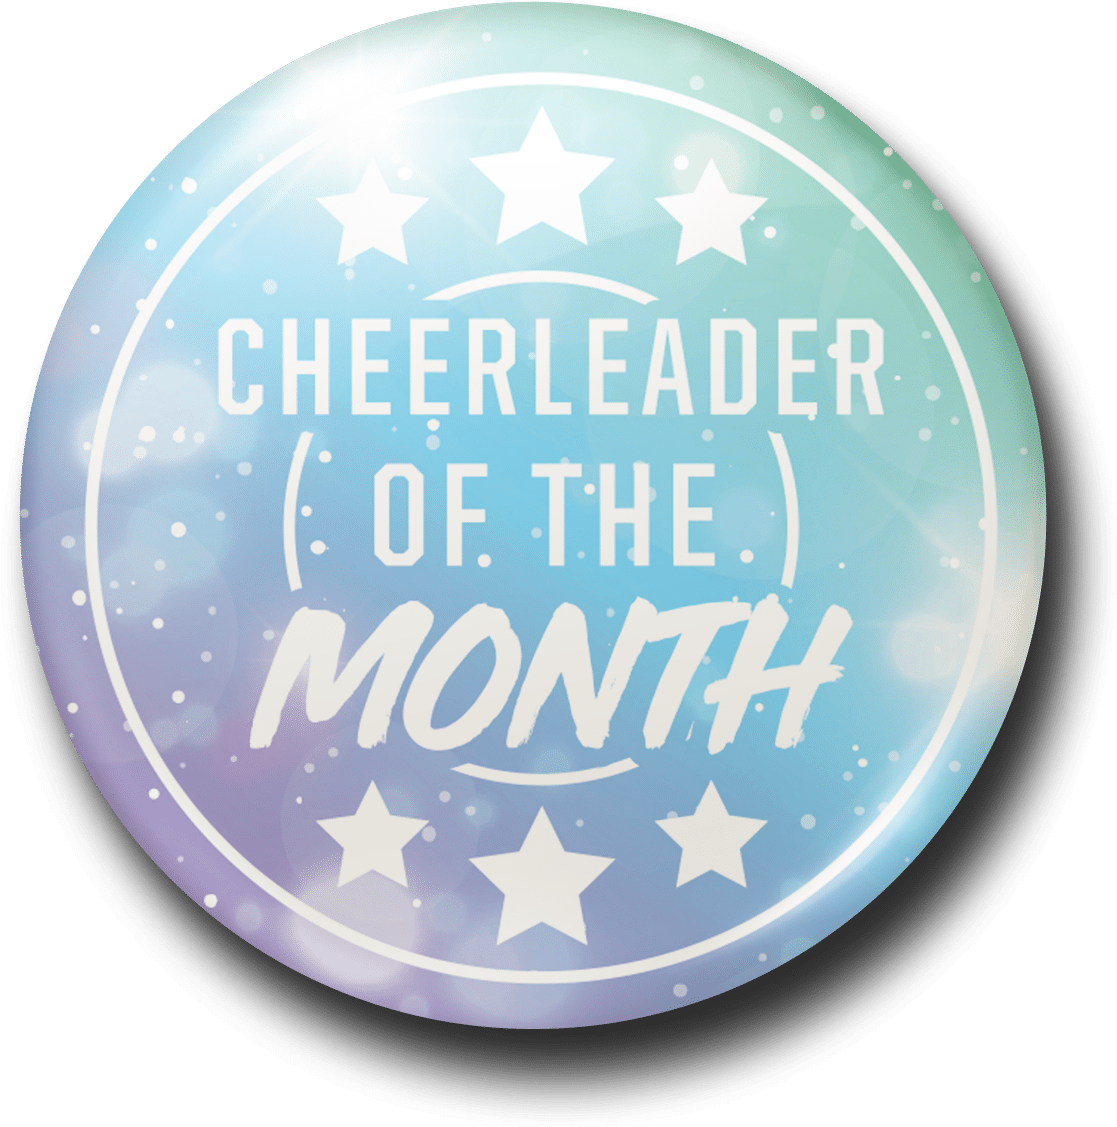 Cheerleaderofthe Month Award Badge PNG image